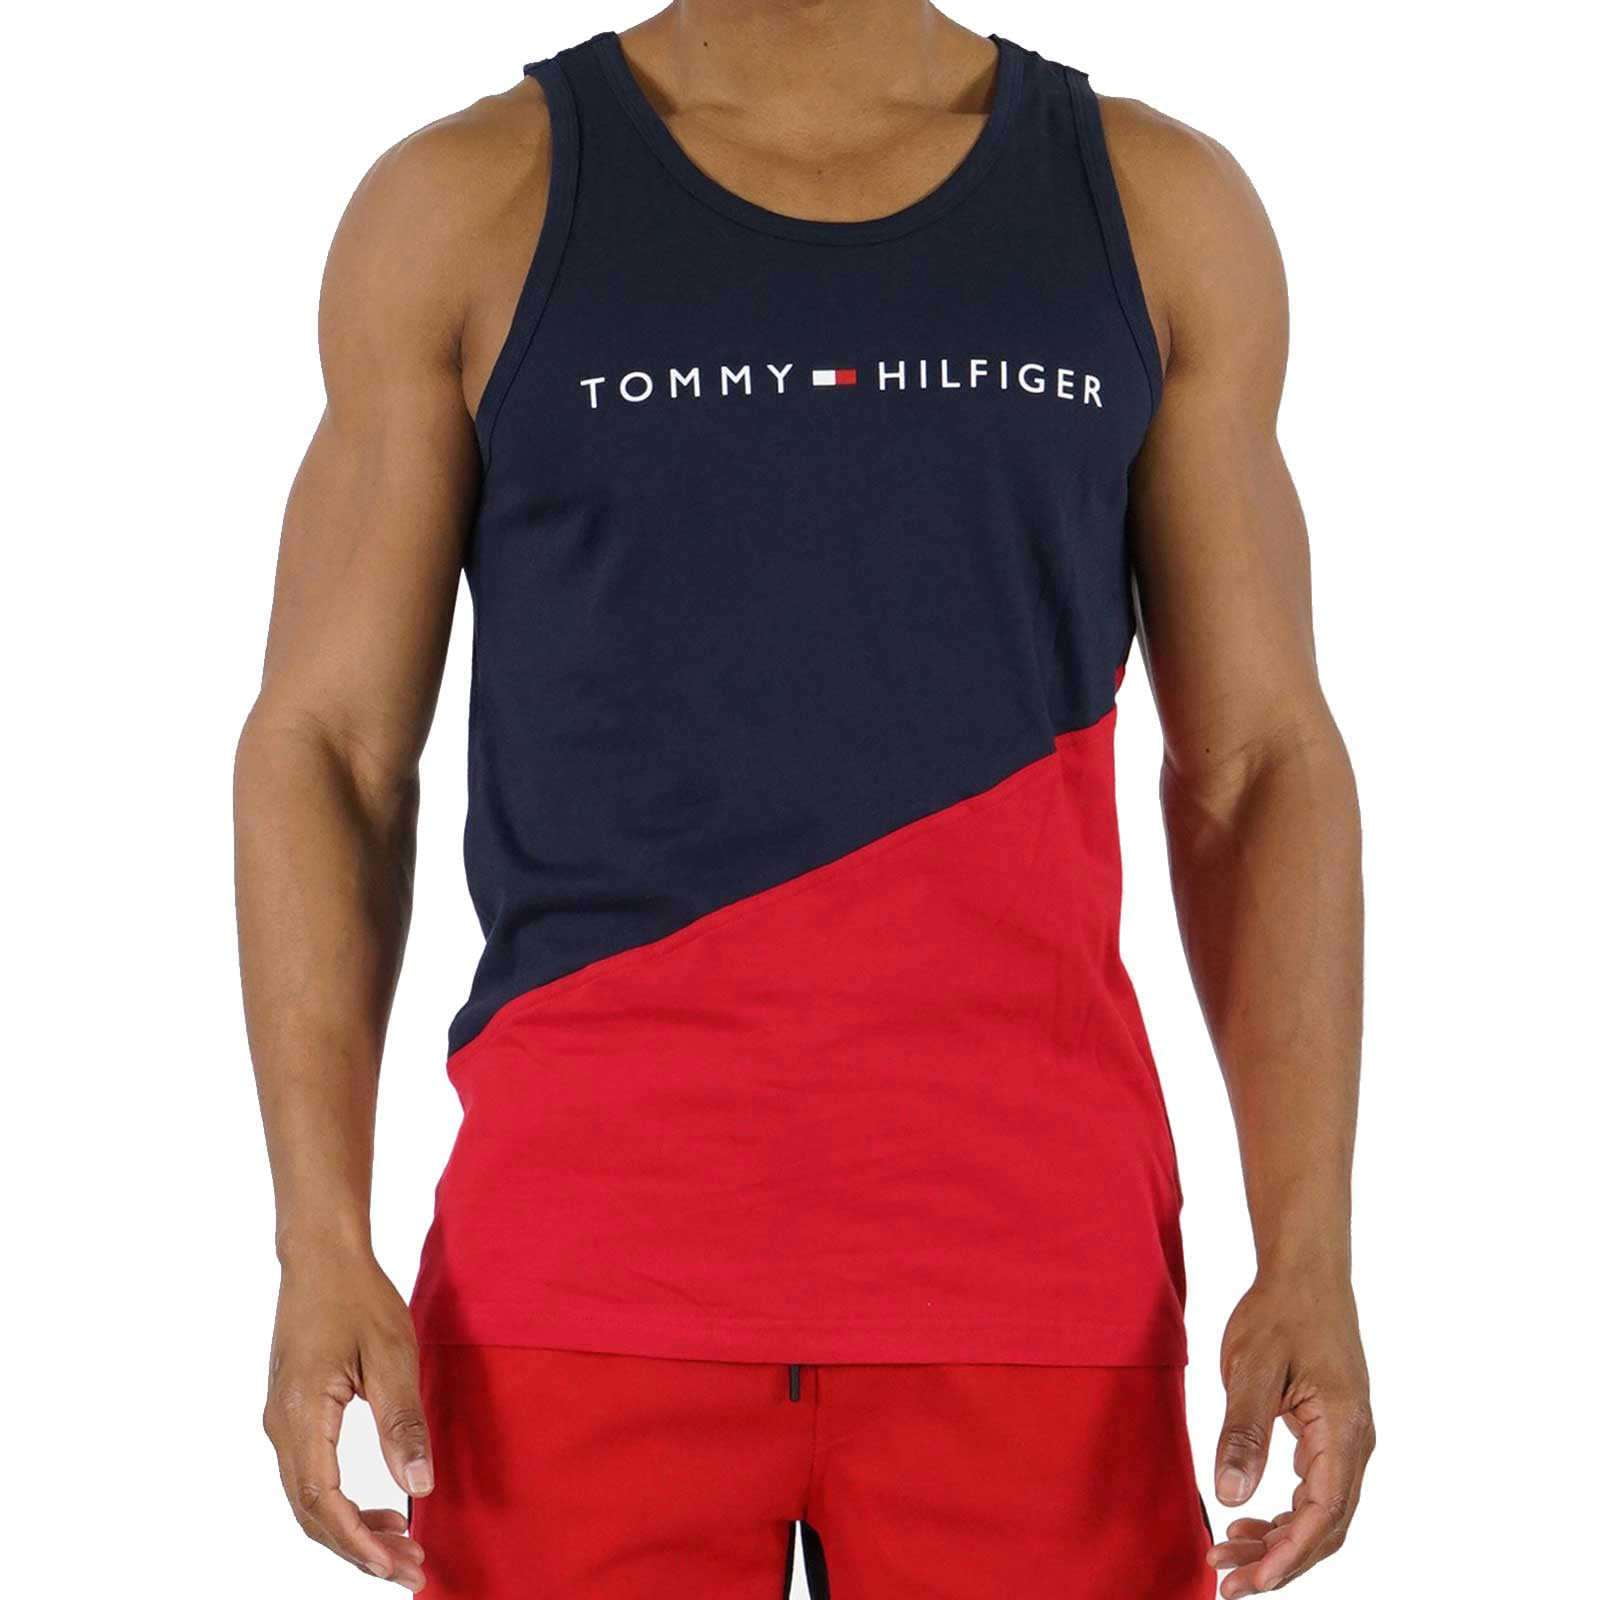 Tommy Hilfiger - Tommy Hilfiger Men's Athletic Cotton Workout Tank Top